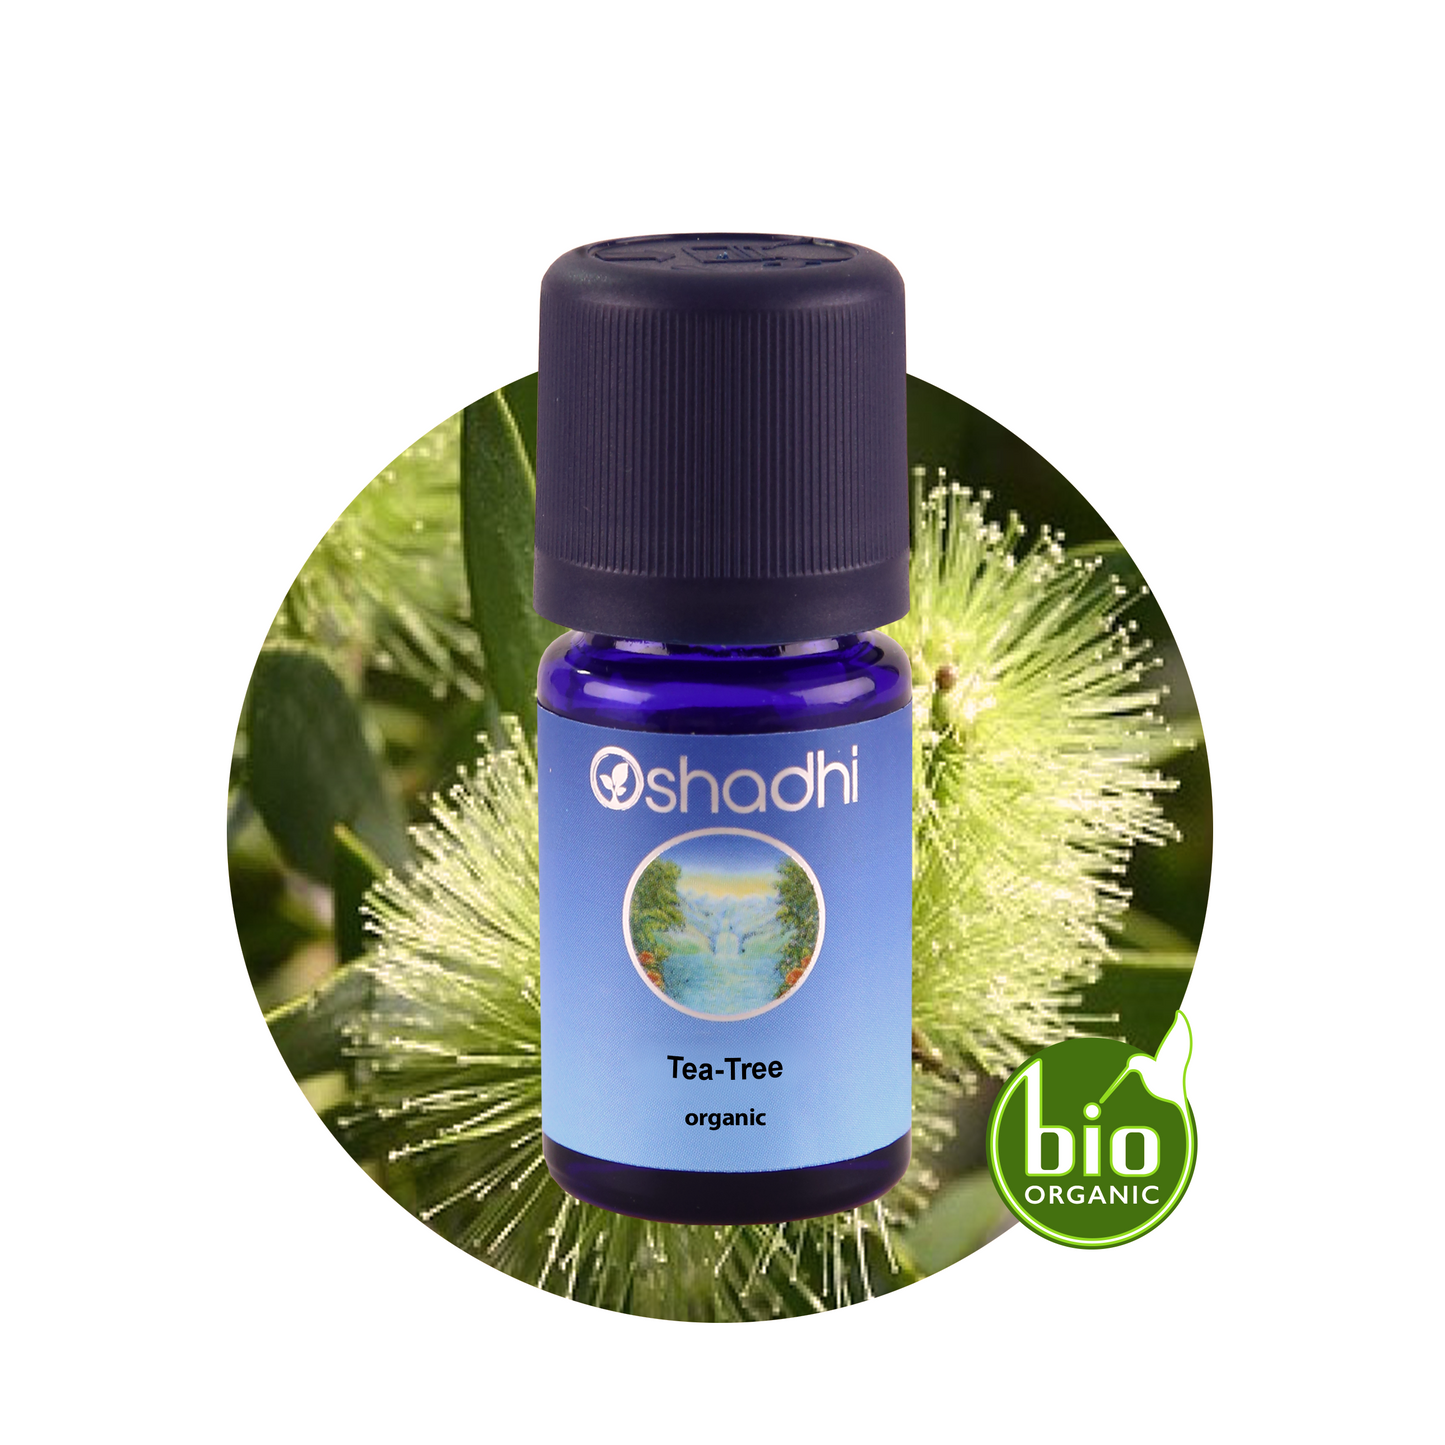 TEA-TREE Tea tree essential oil Melaleuca alternifolia